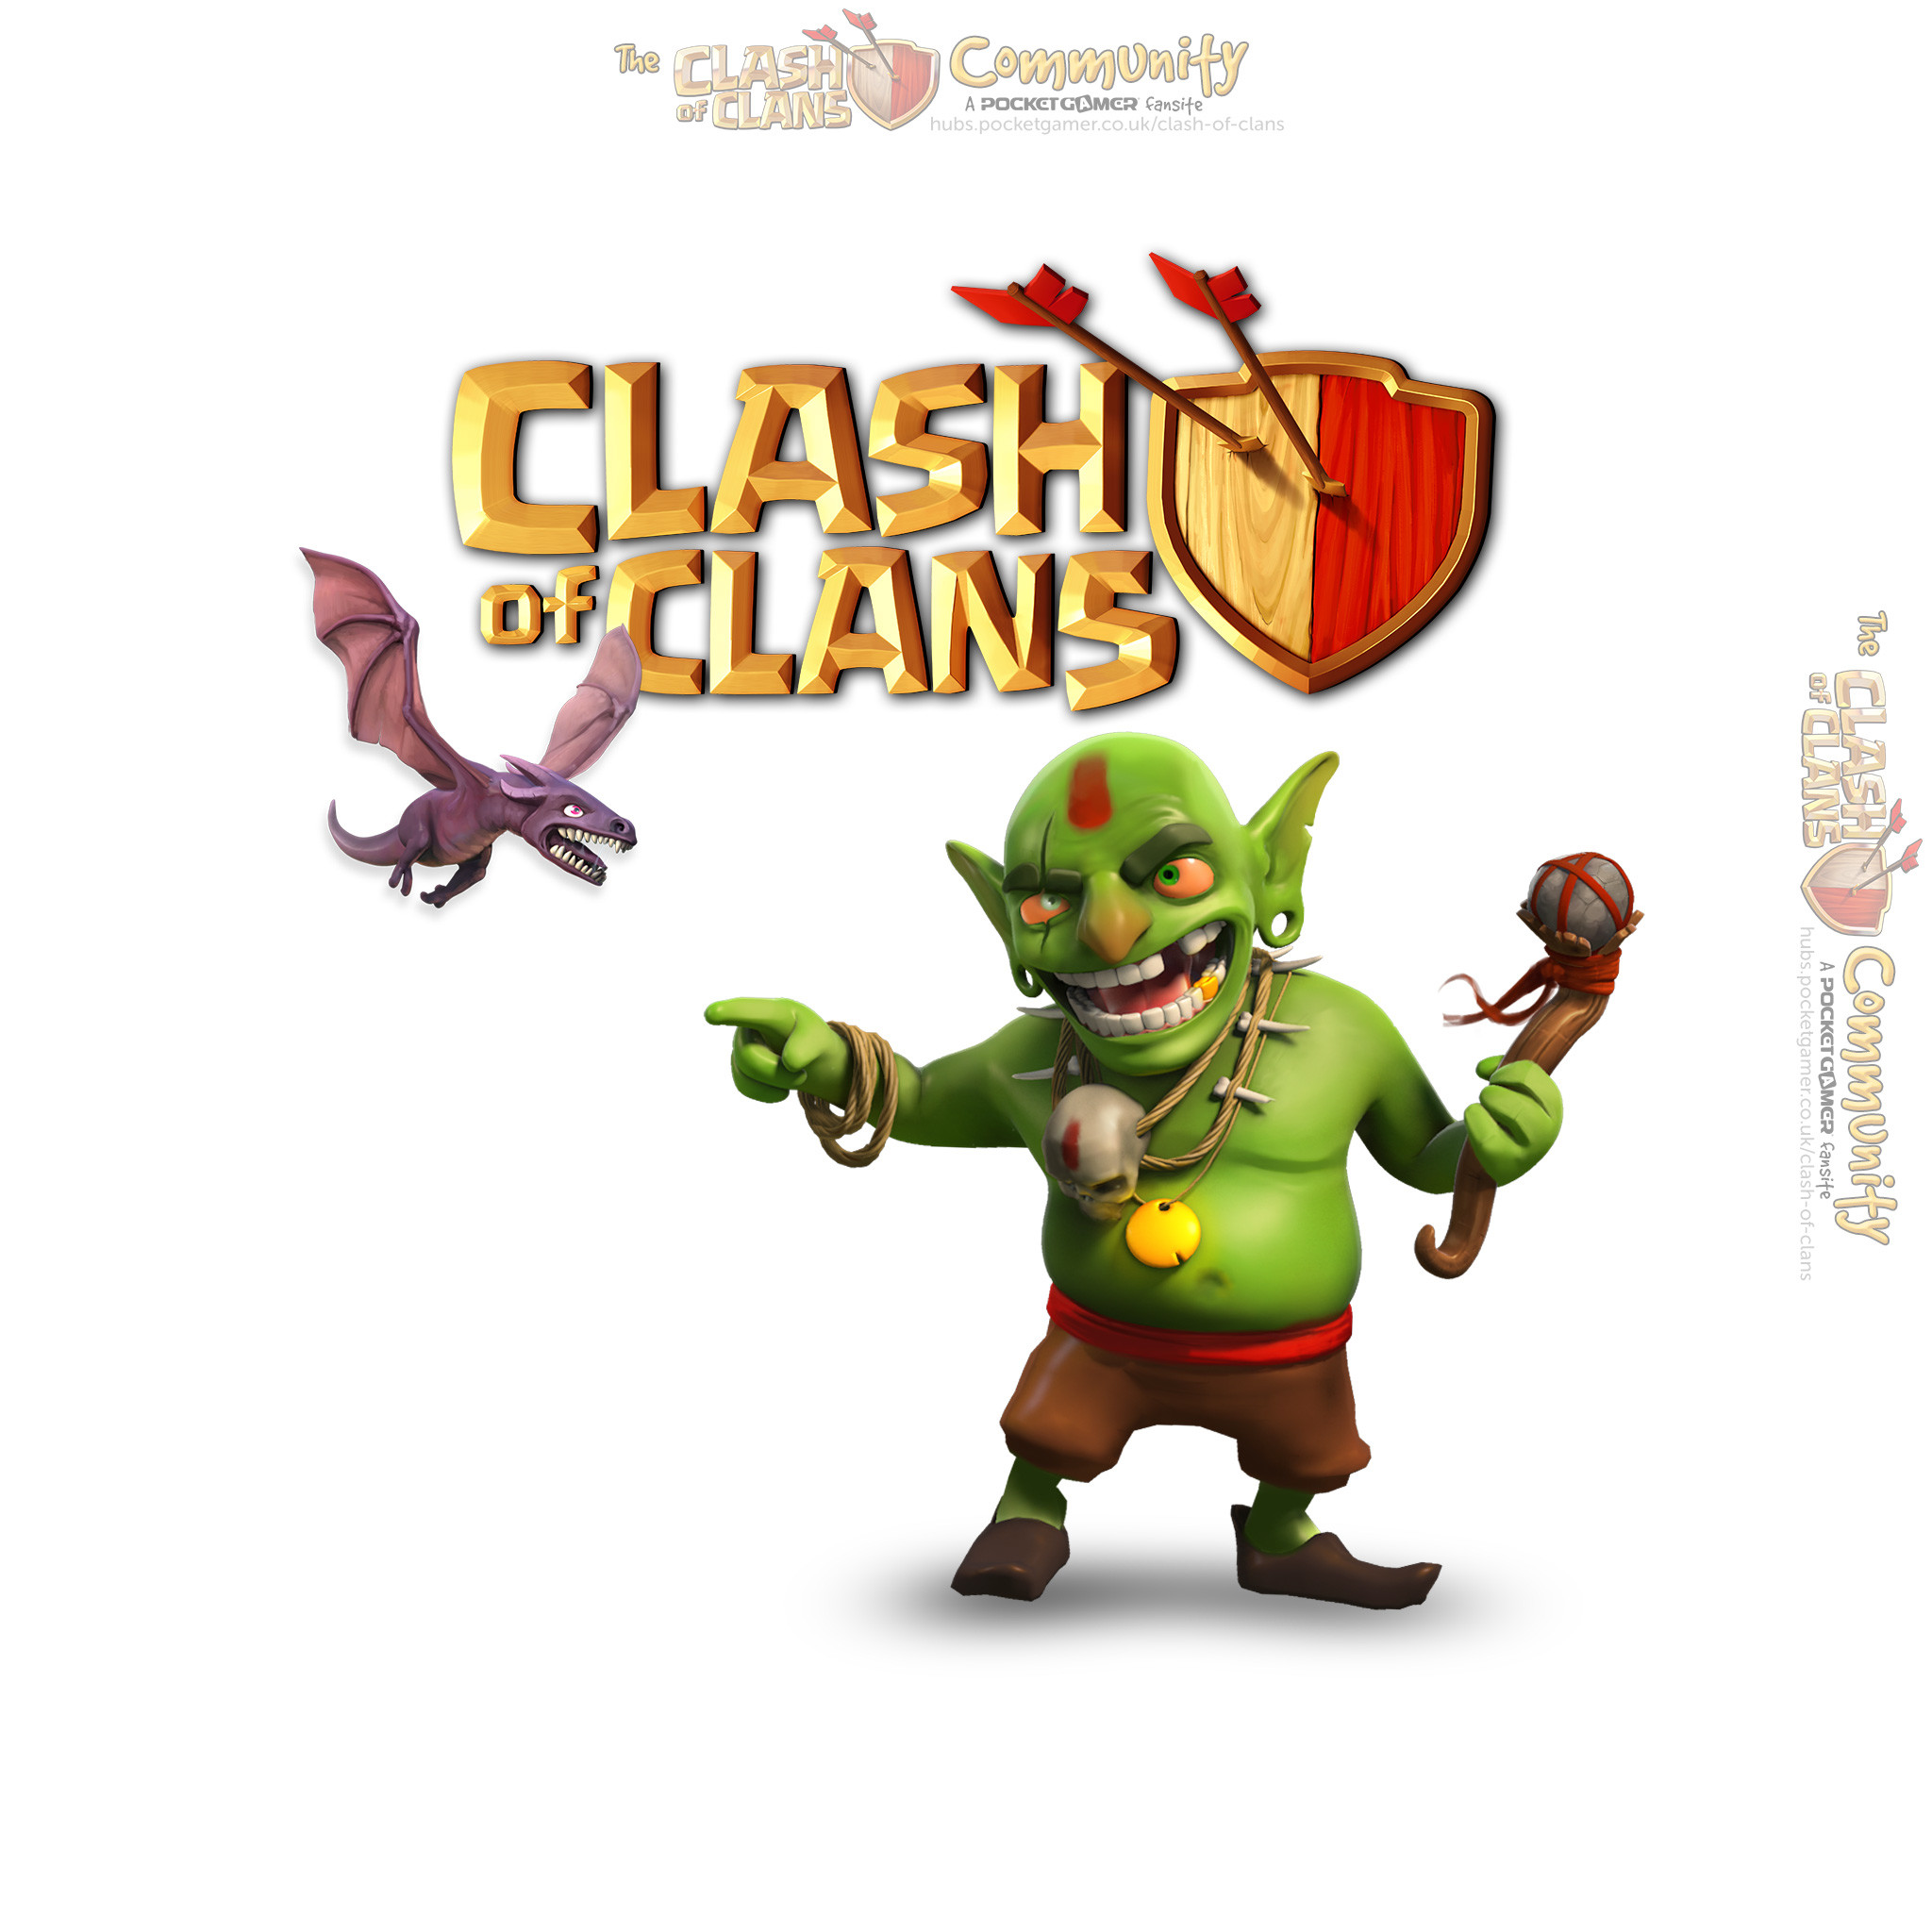 2048x2048 Clash of Clans iPad Wallpaper